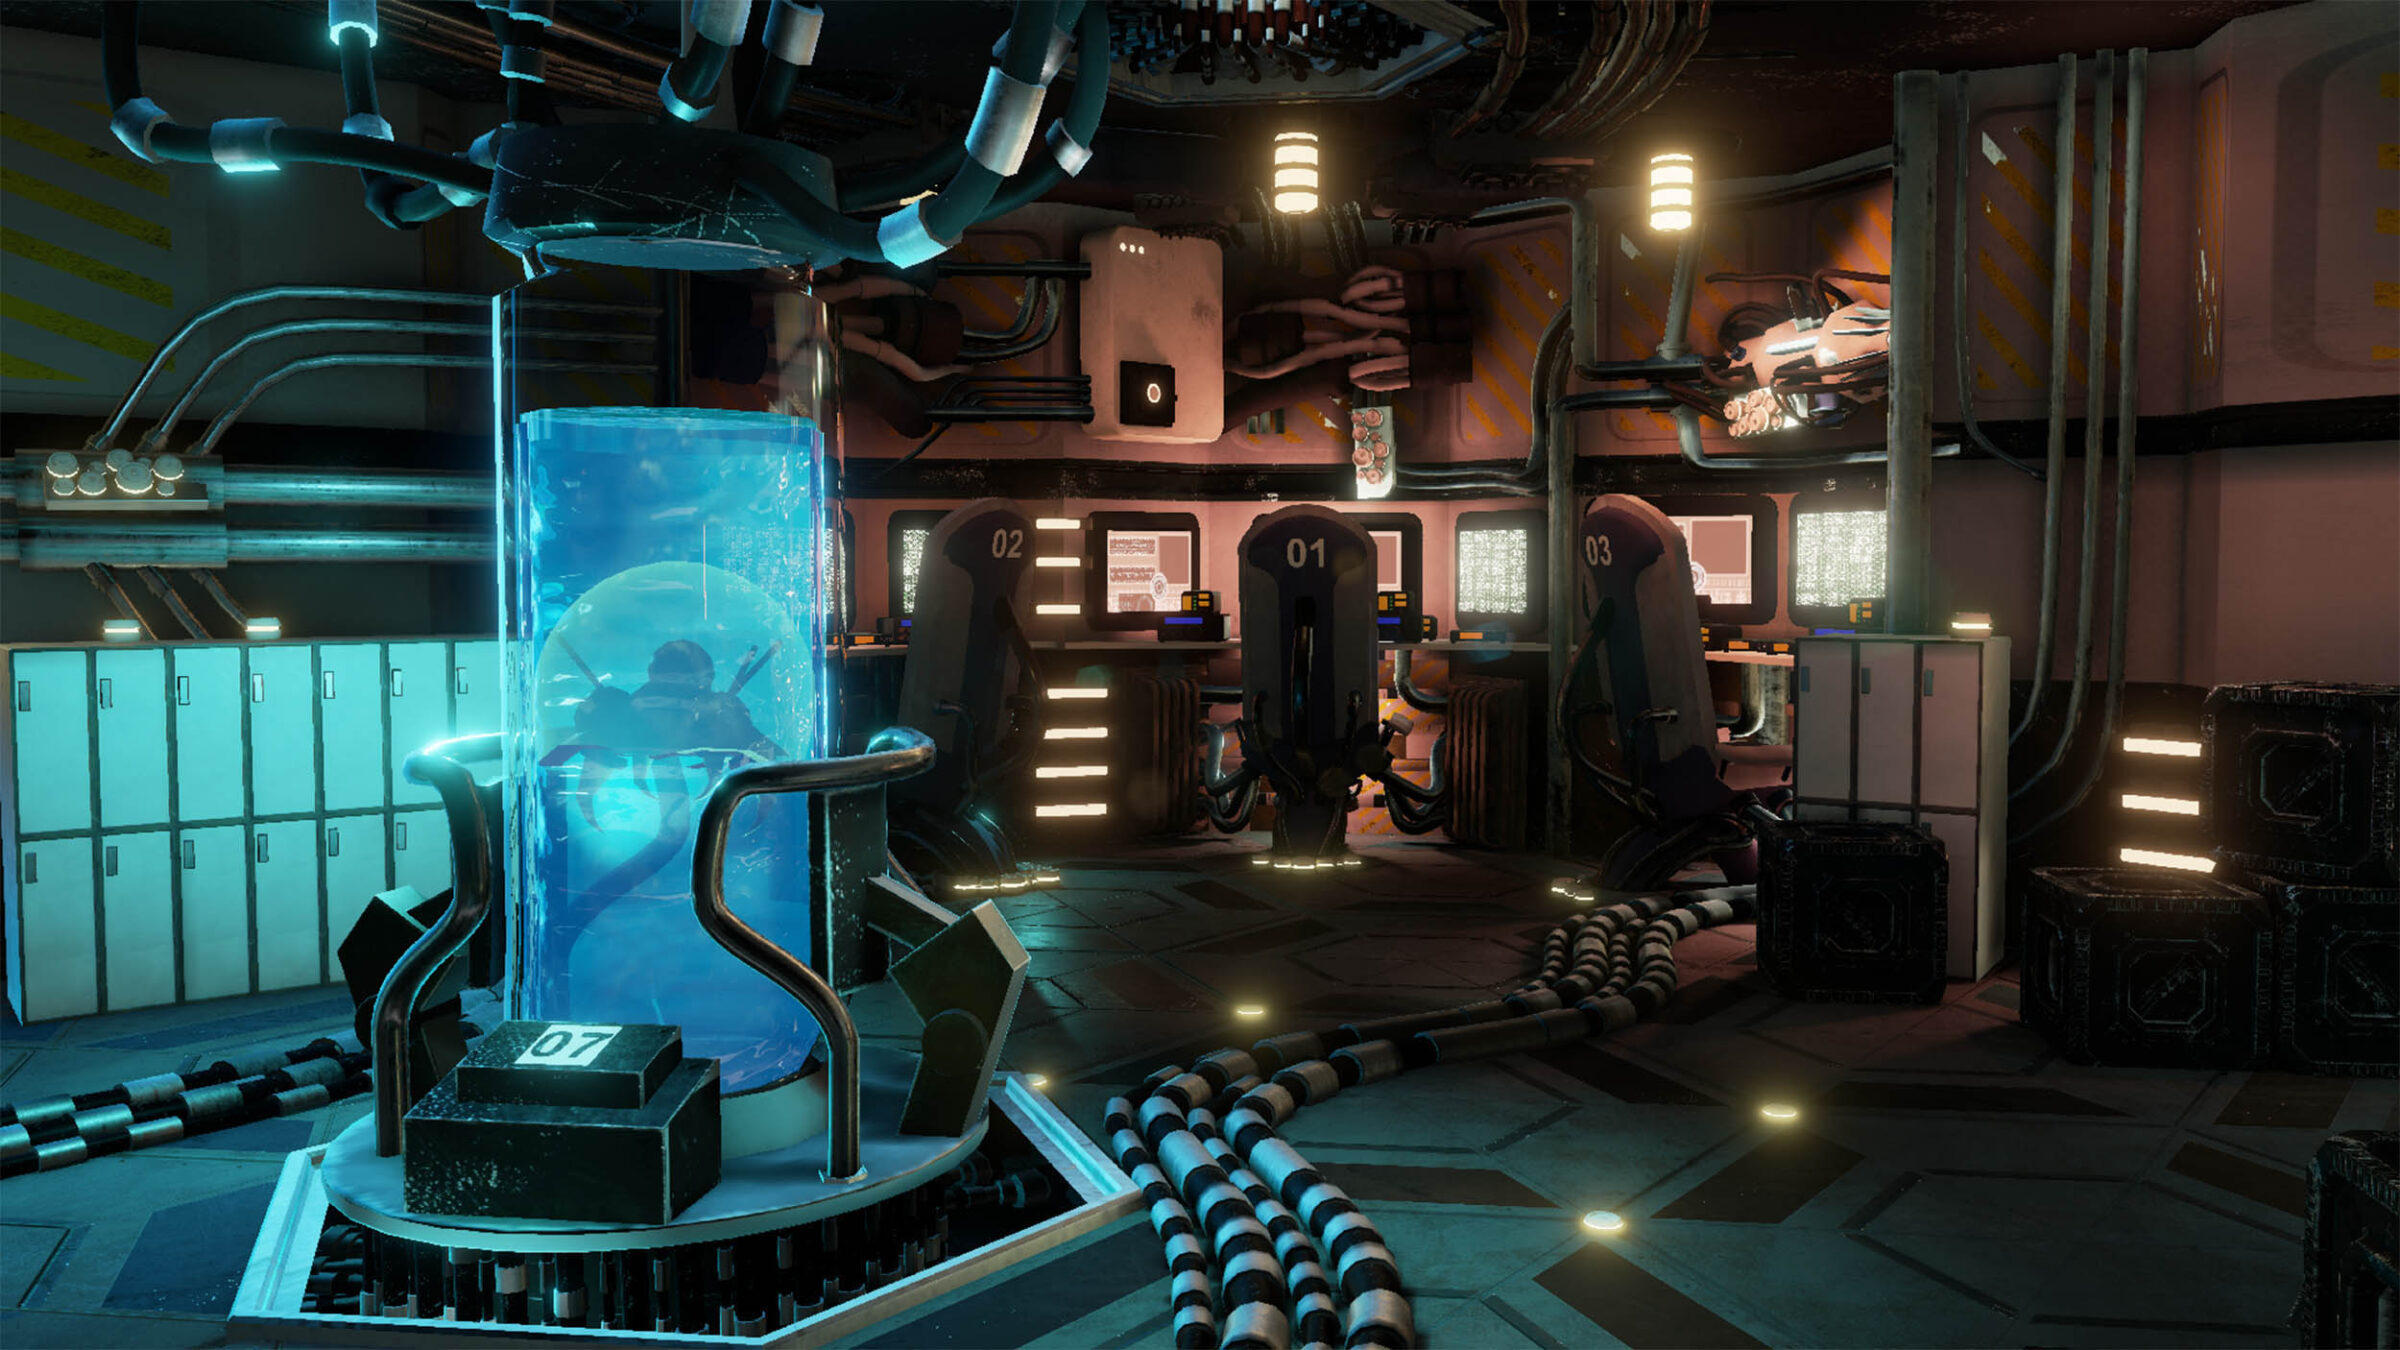 game art of a laboratory interior